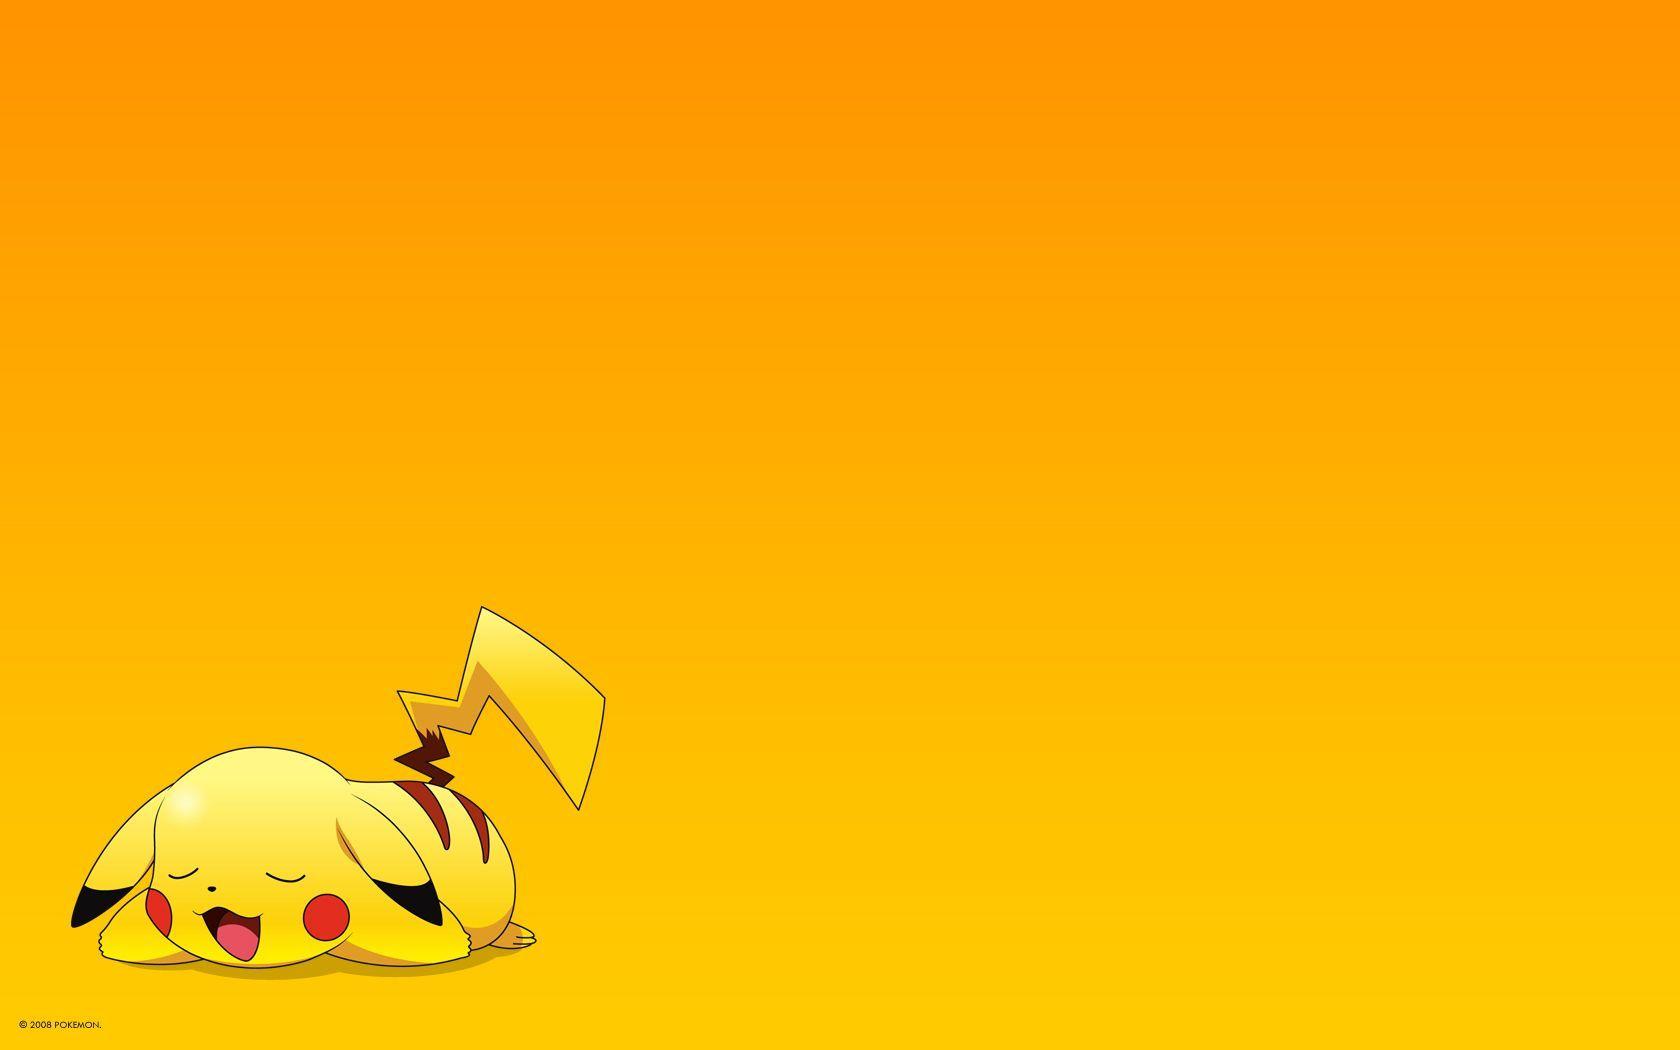 pokemon pikachu sleeping wallpaper hd 4492 wallpaper forwallpapers